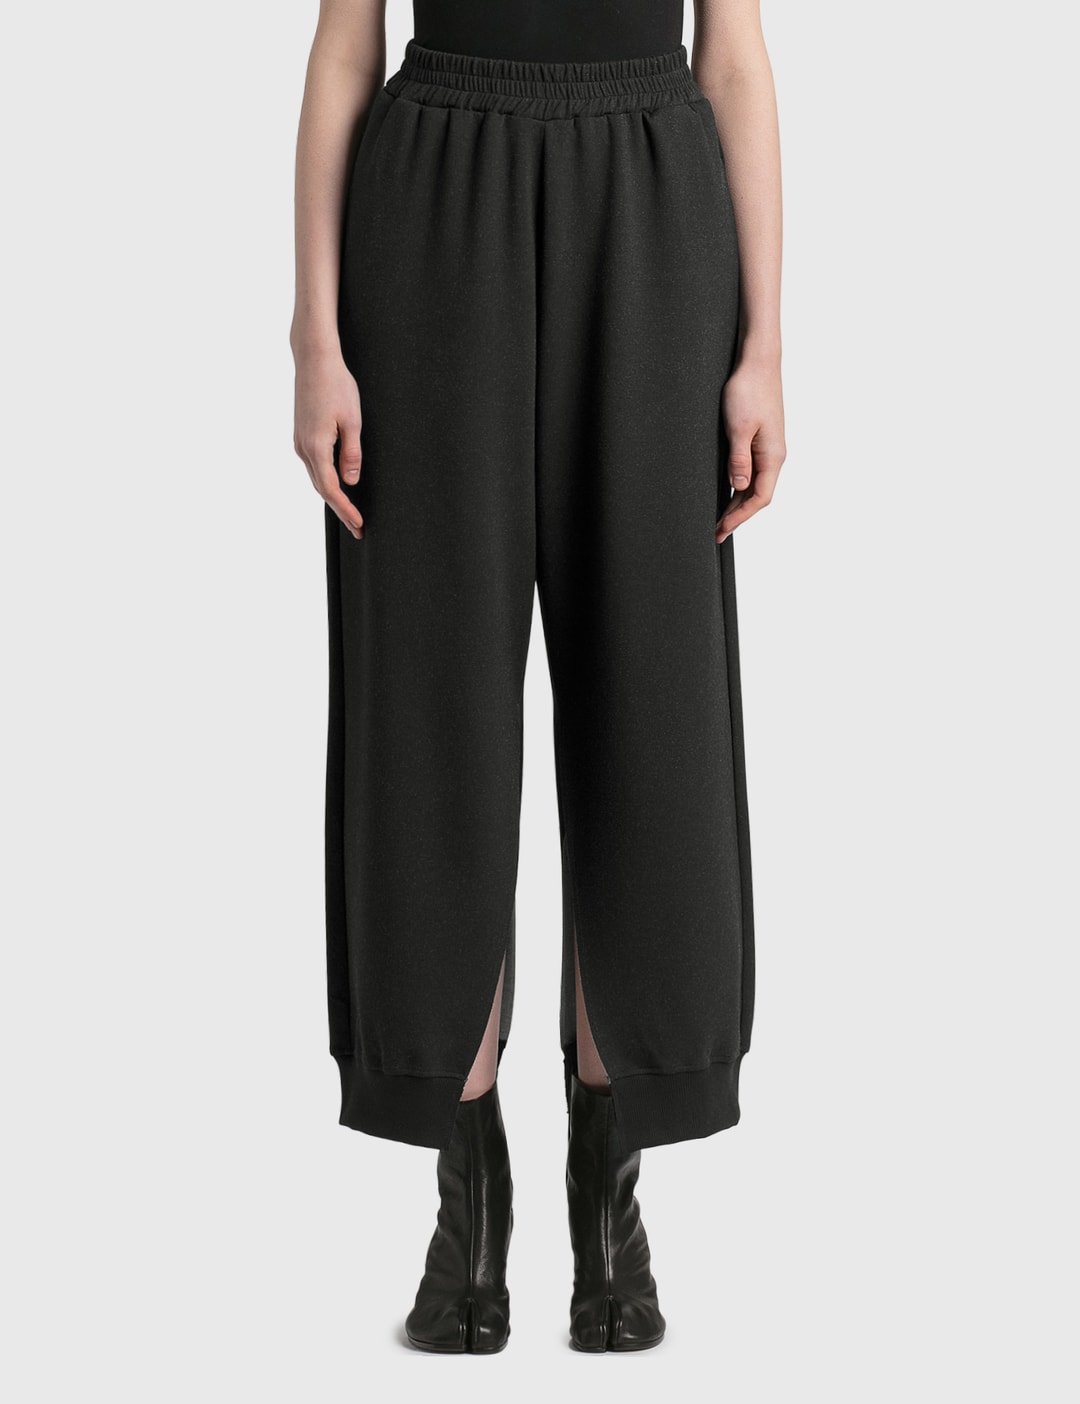 MM6 Maison Margiela - Split Sweatpants | HBX - Globally Curated Fashion ...